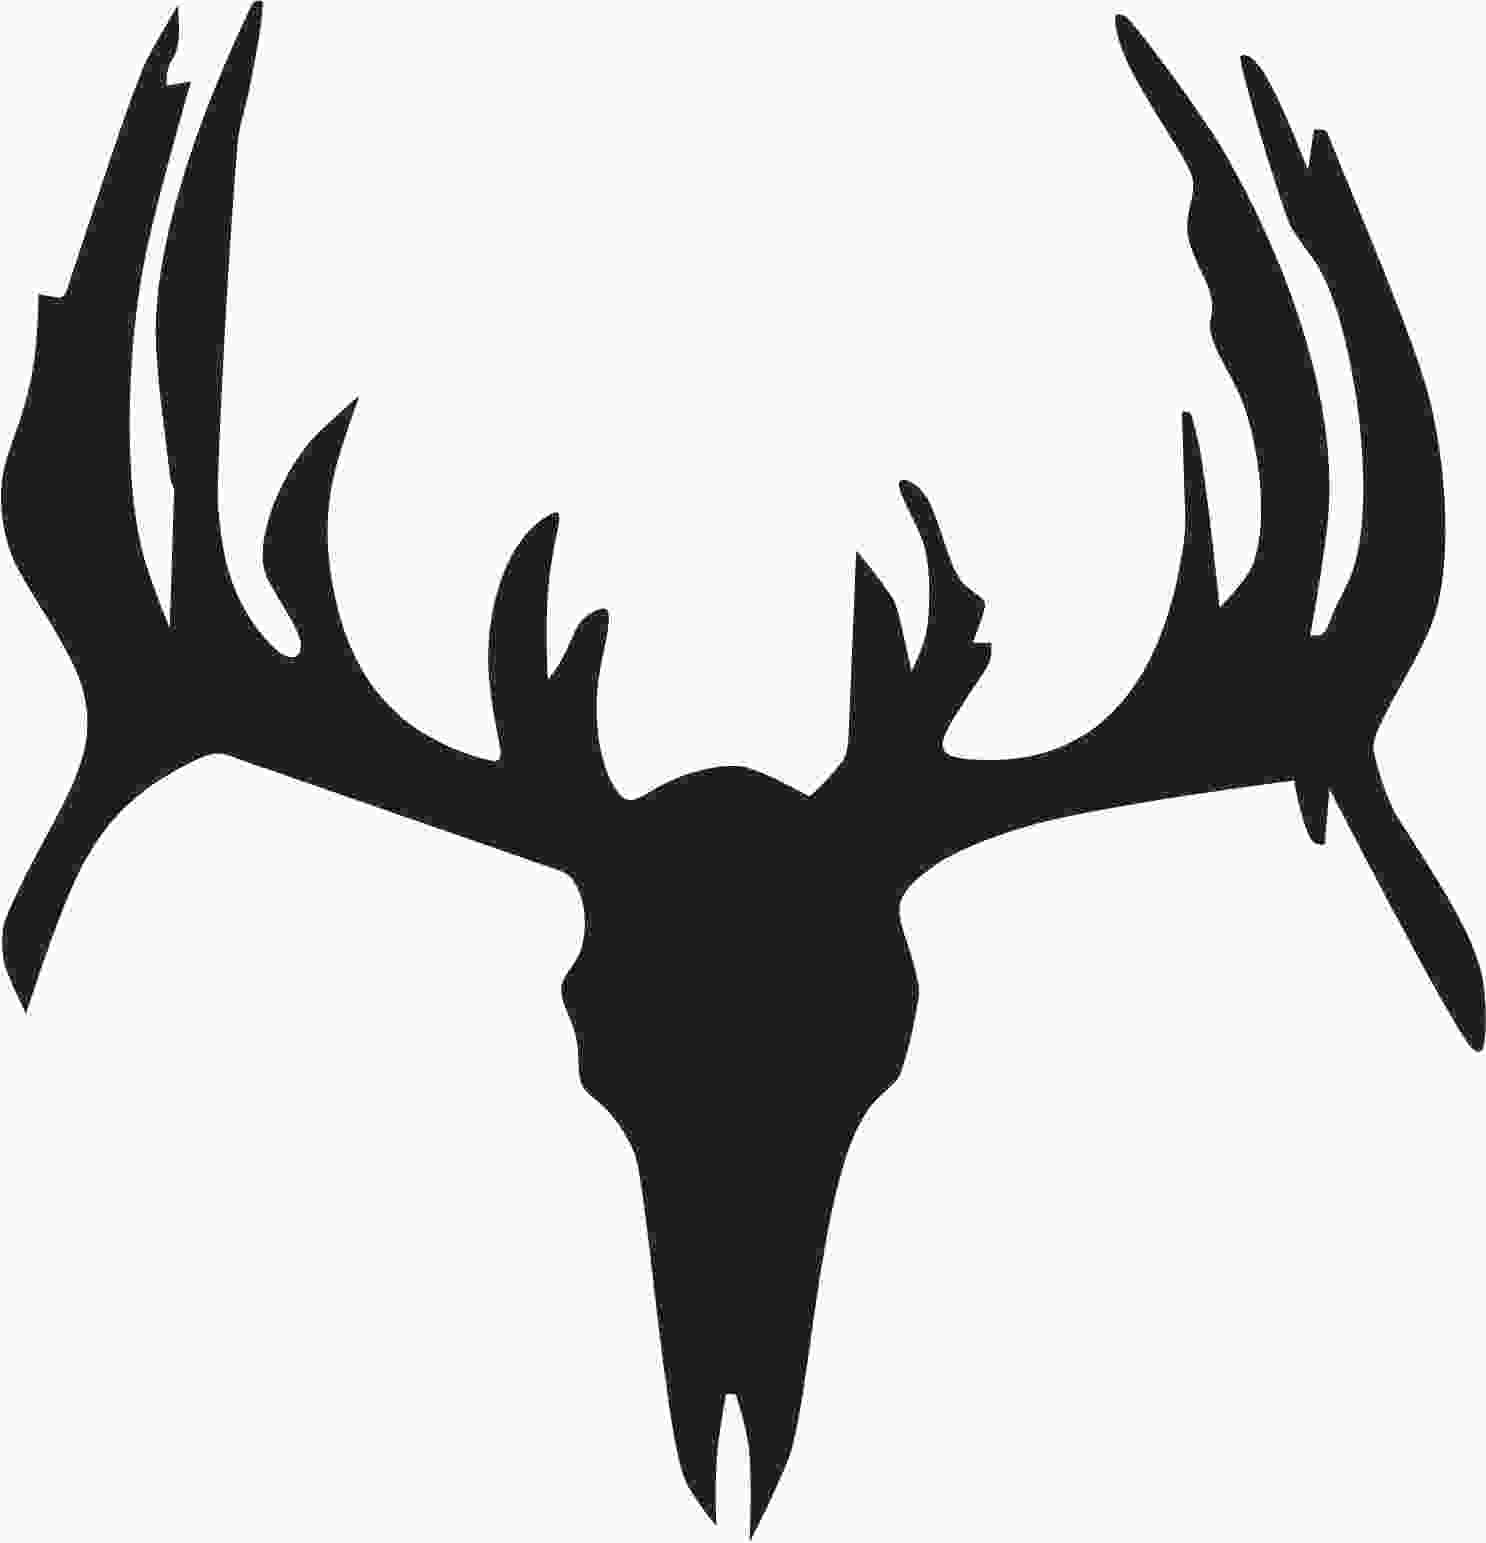 Deer Skull Silhouette